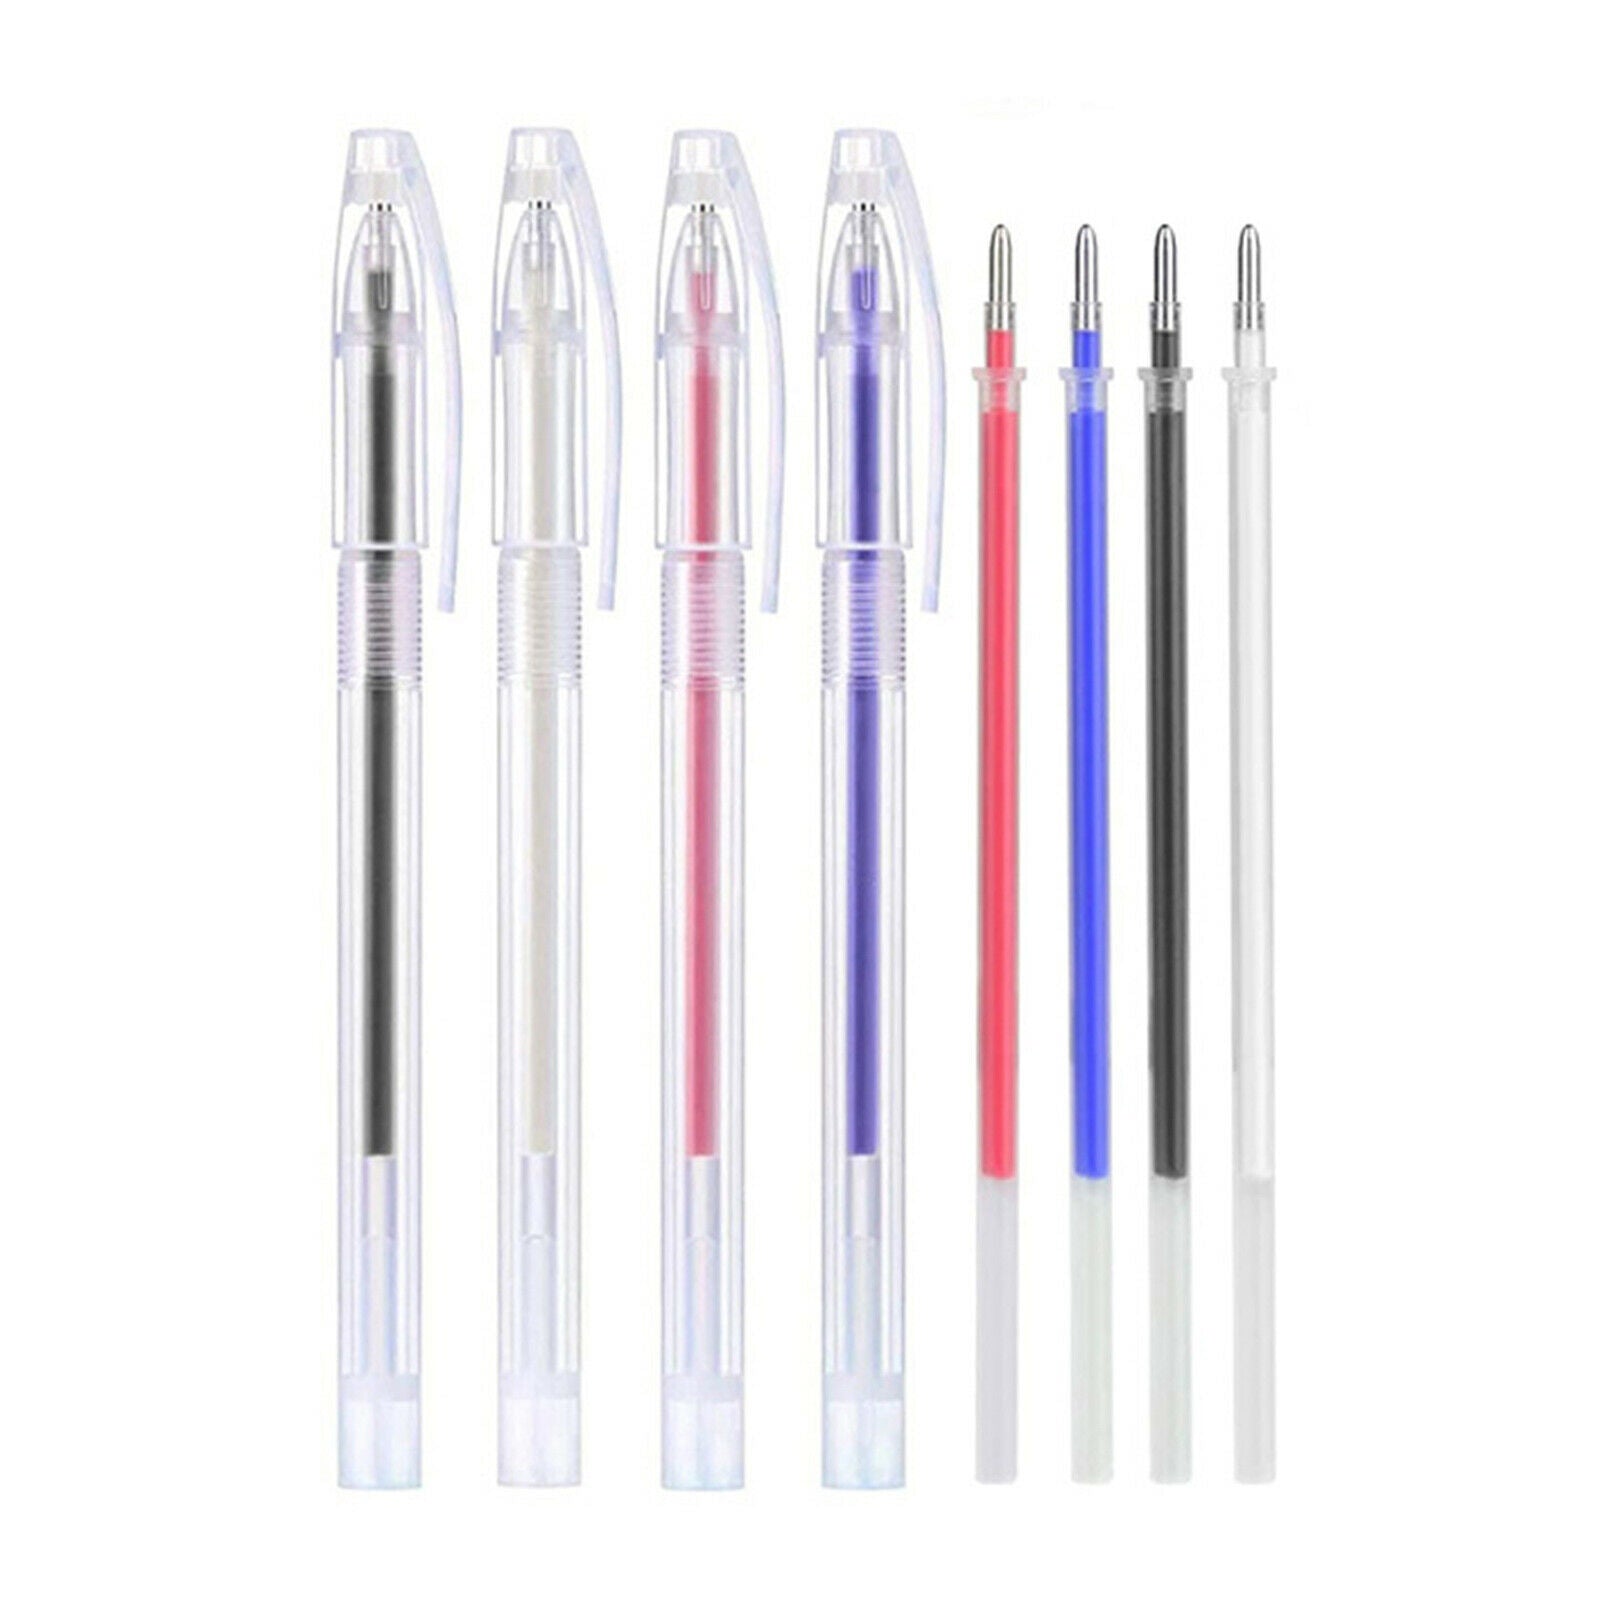 Sewing Heat Erasable Pen Refills Fabric Marking Pens Dressmaking Chalks